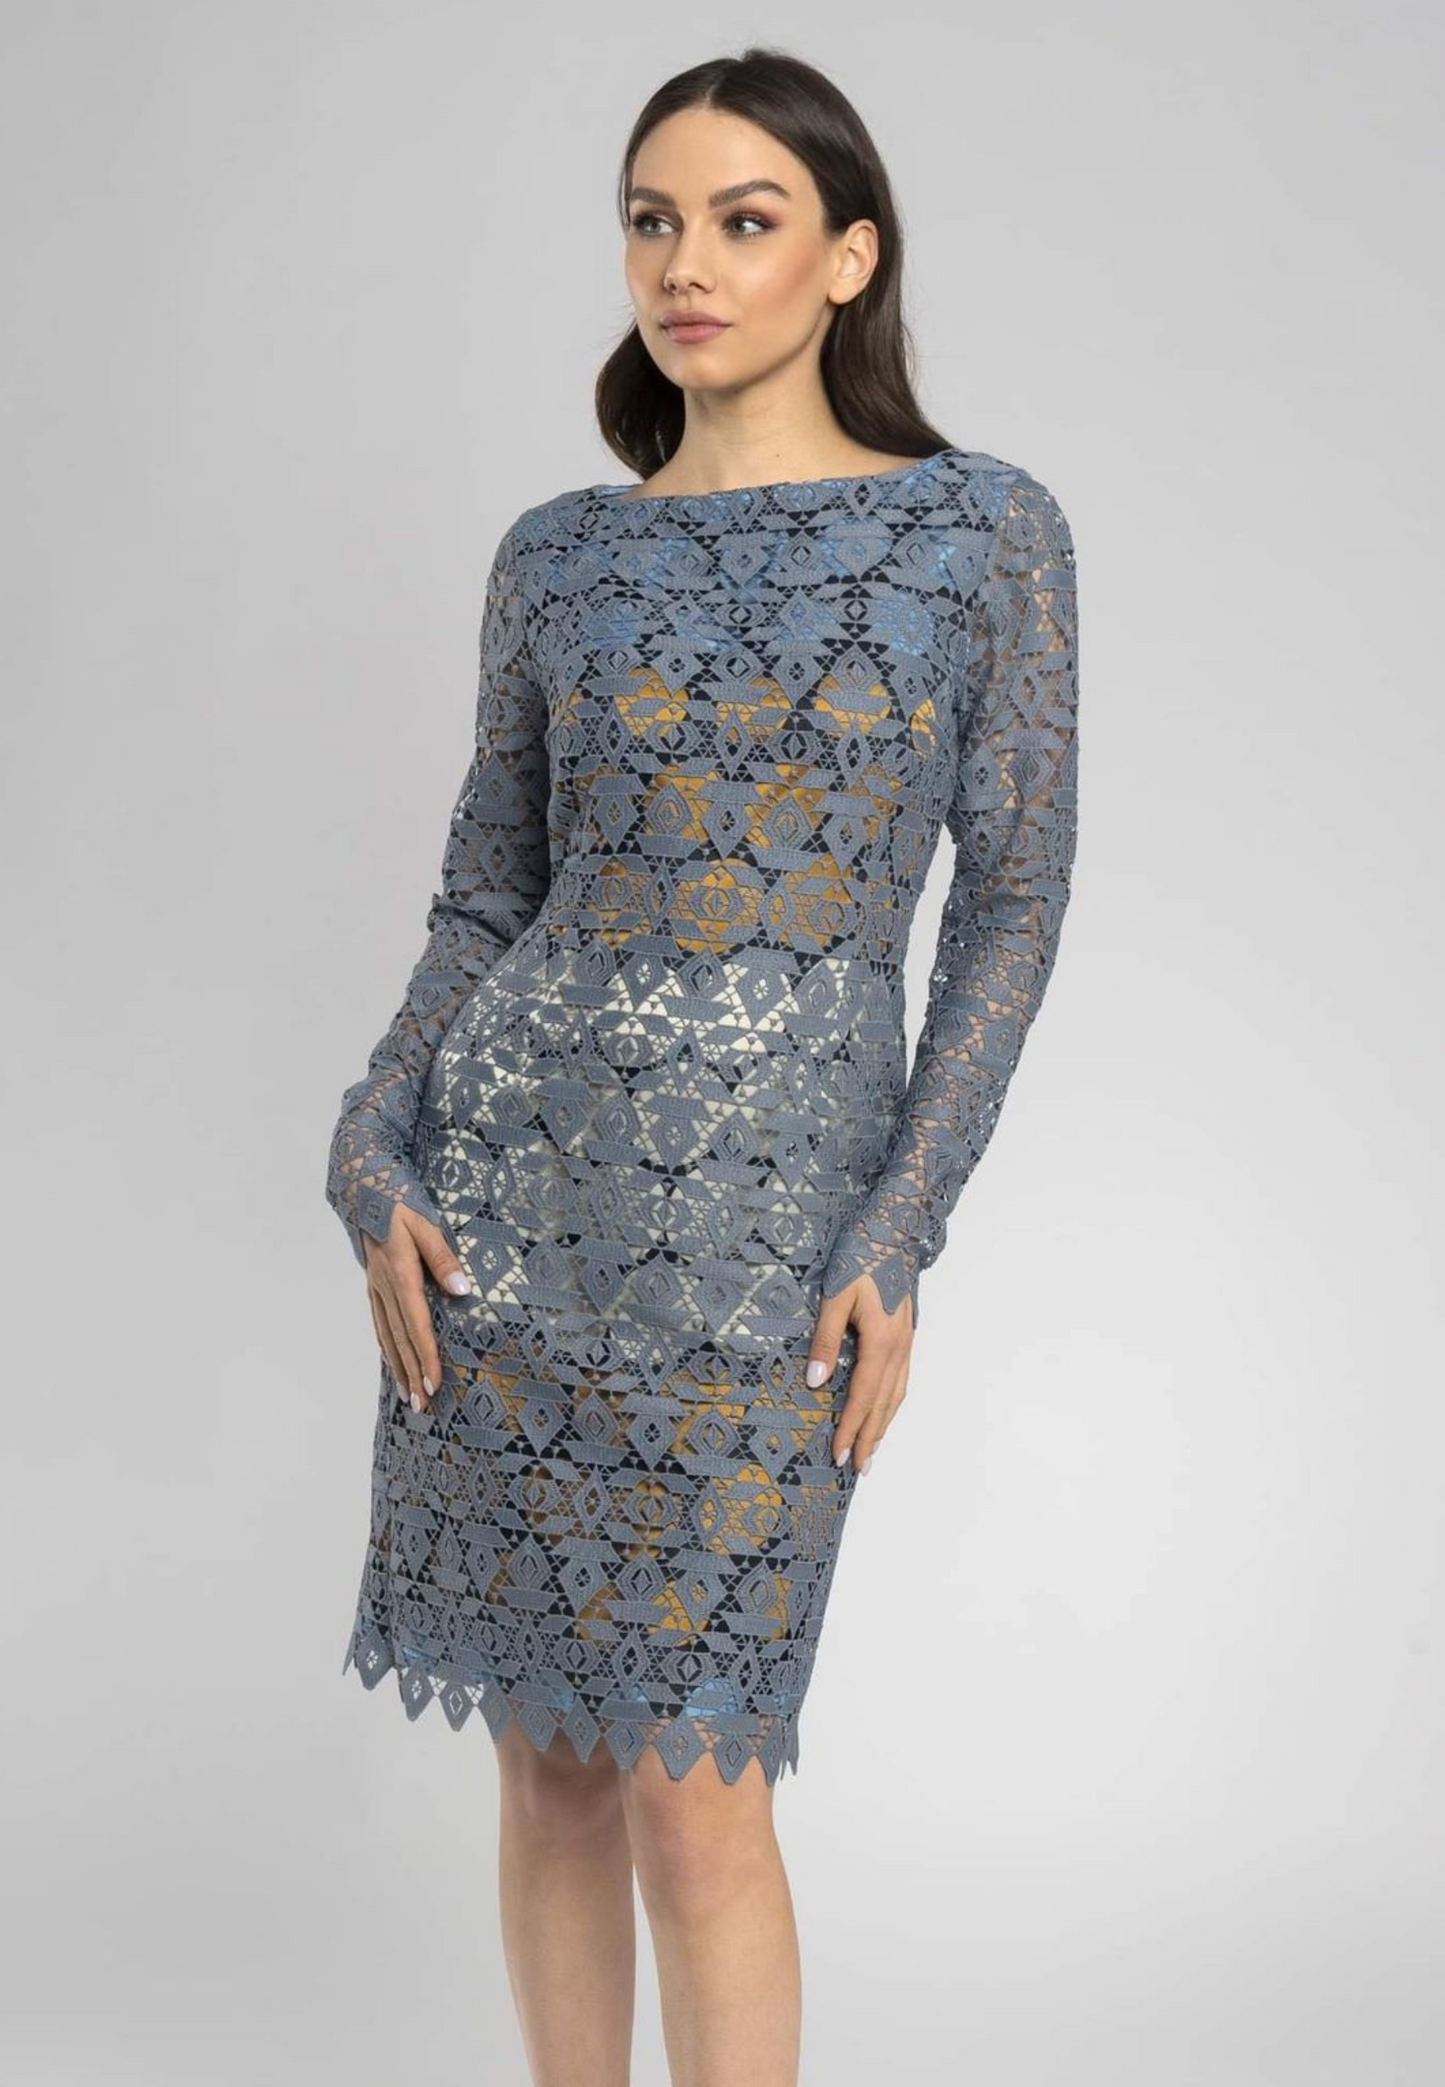 Azzurra Lace Sheath Dress - Modern Style and Femininity in One Stunning Silhouette